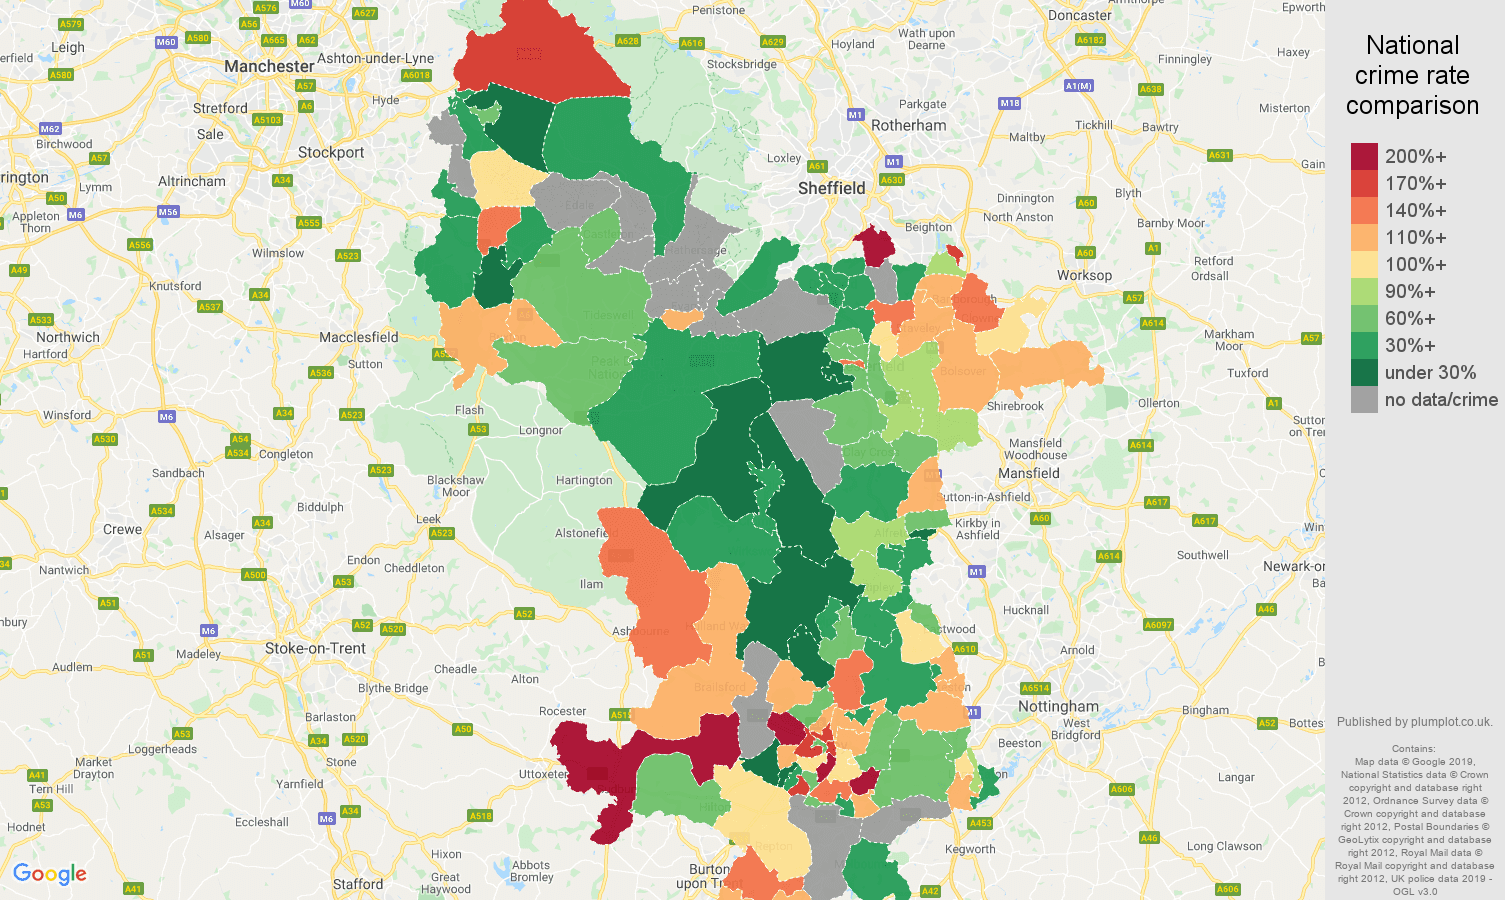 Derbyshire other crime rate comparison map